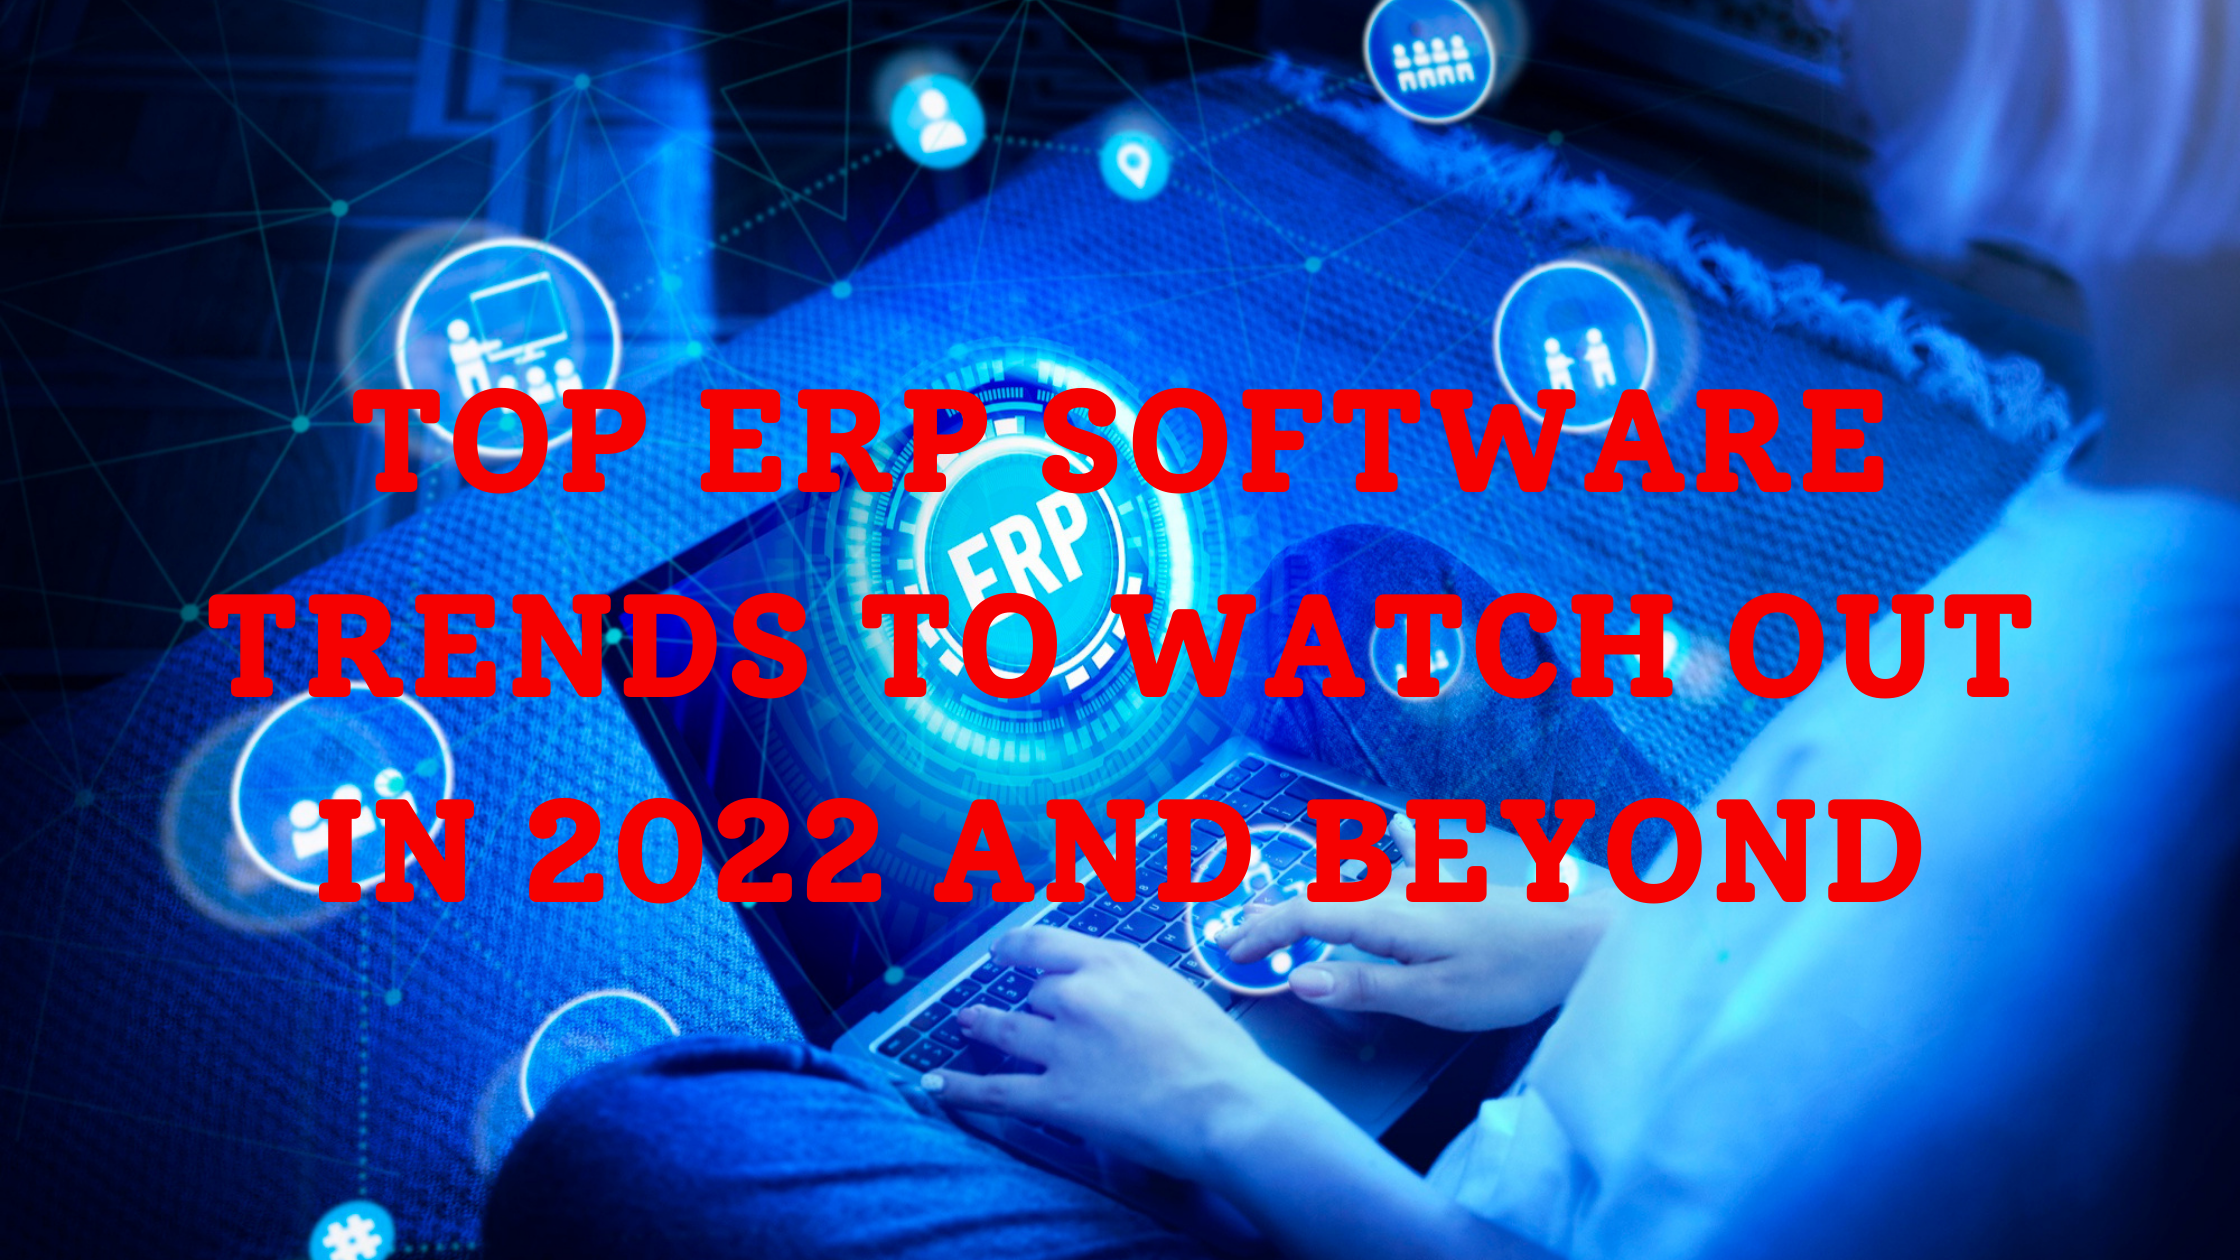 ERP Software Trends